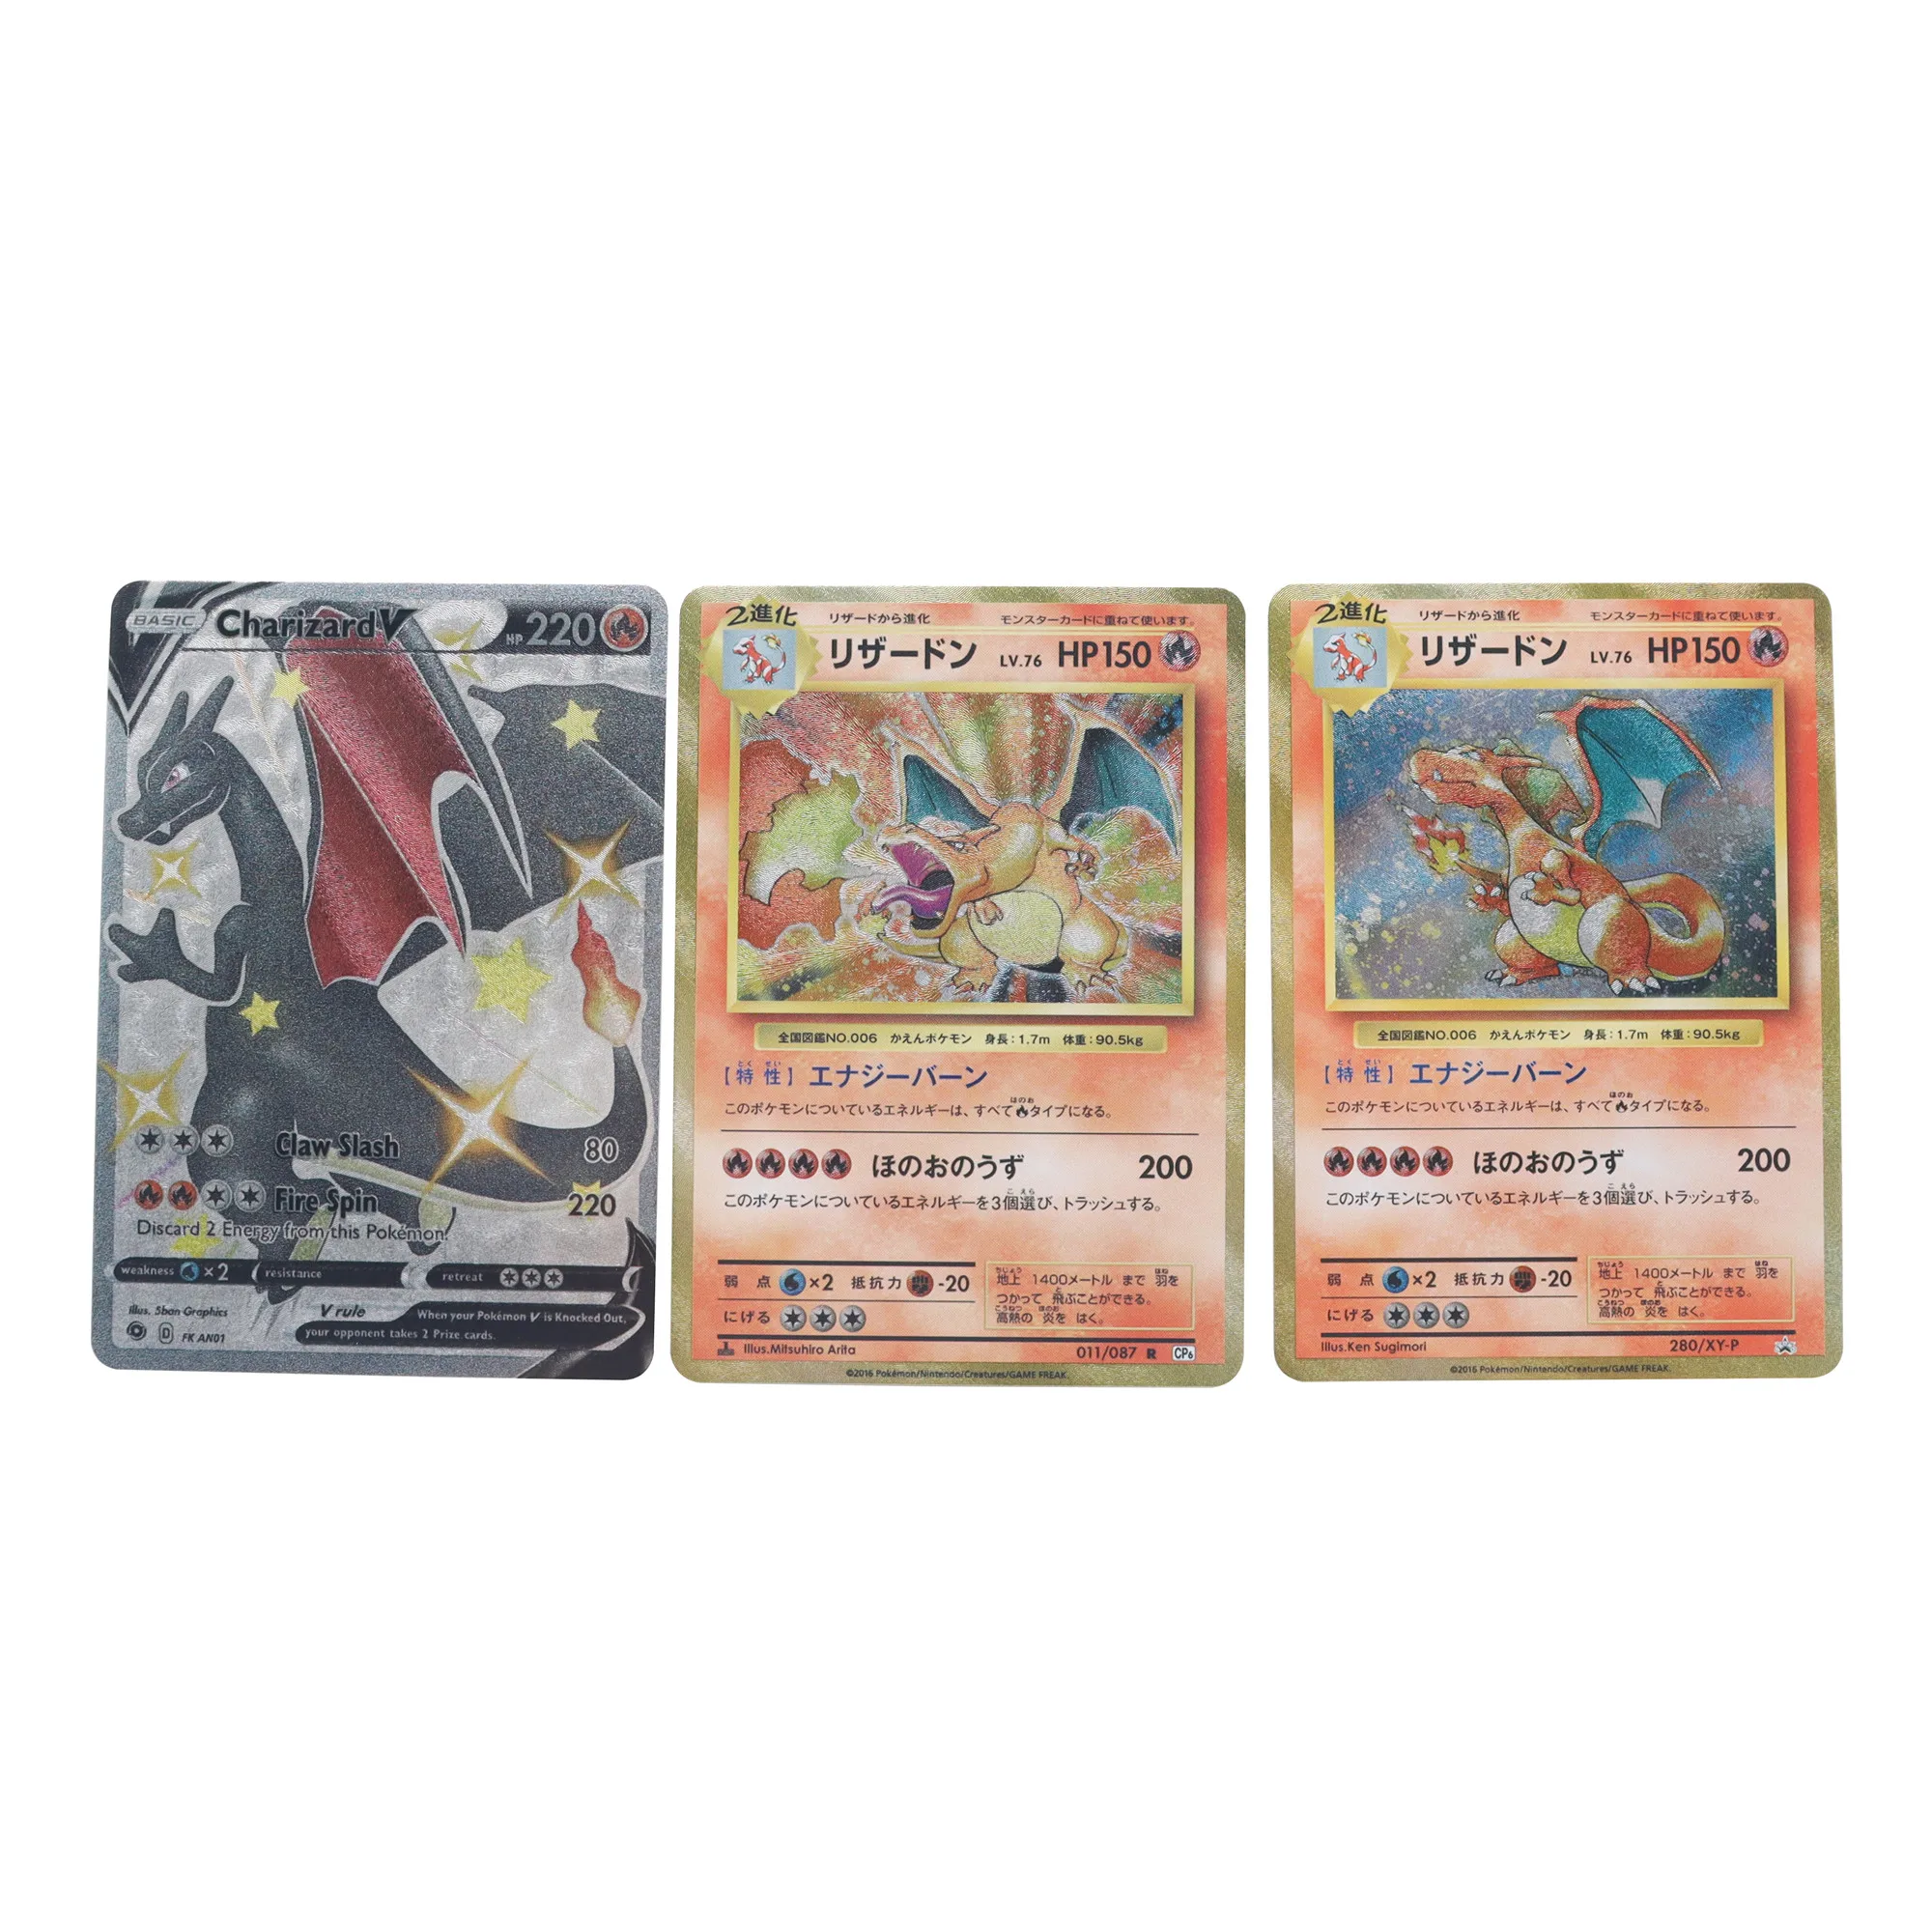 Charizard Cards in the Pokemon TCG